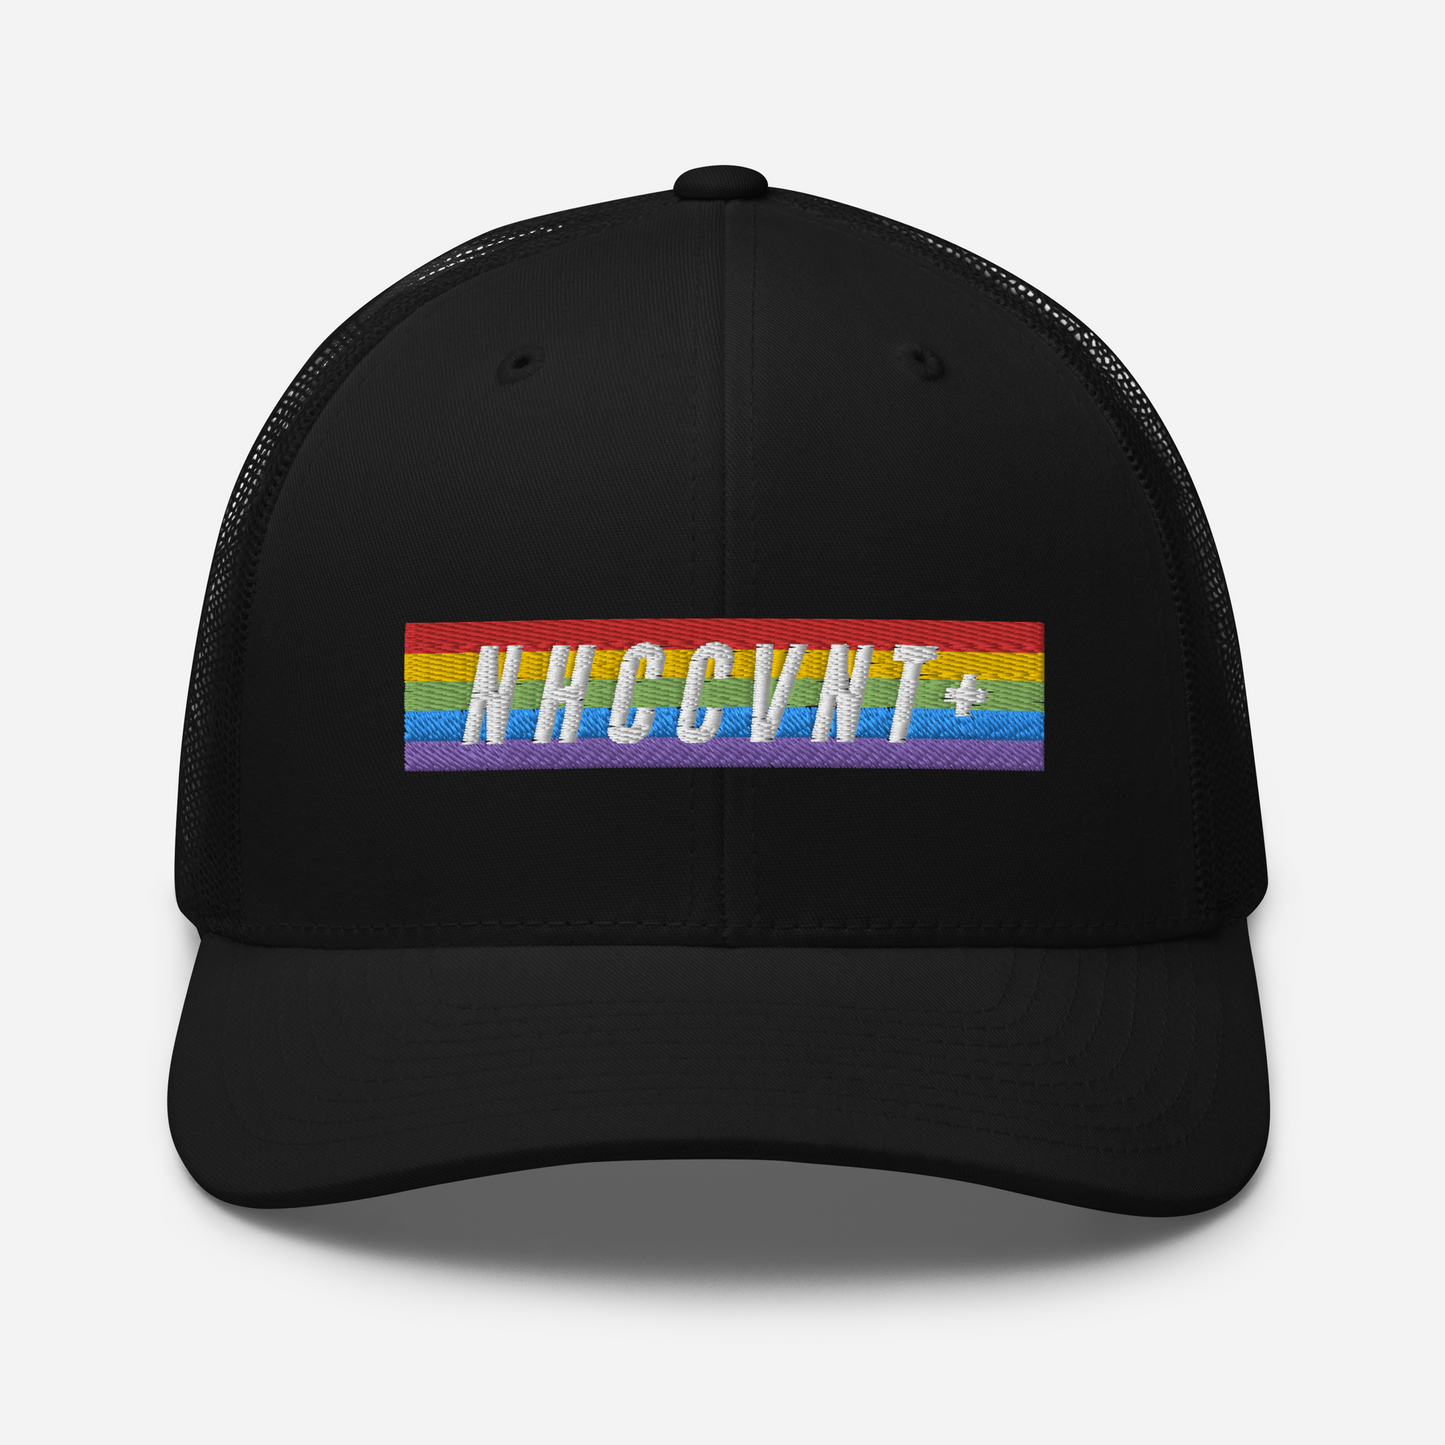 NHCCVNT+ Trucker Hat